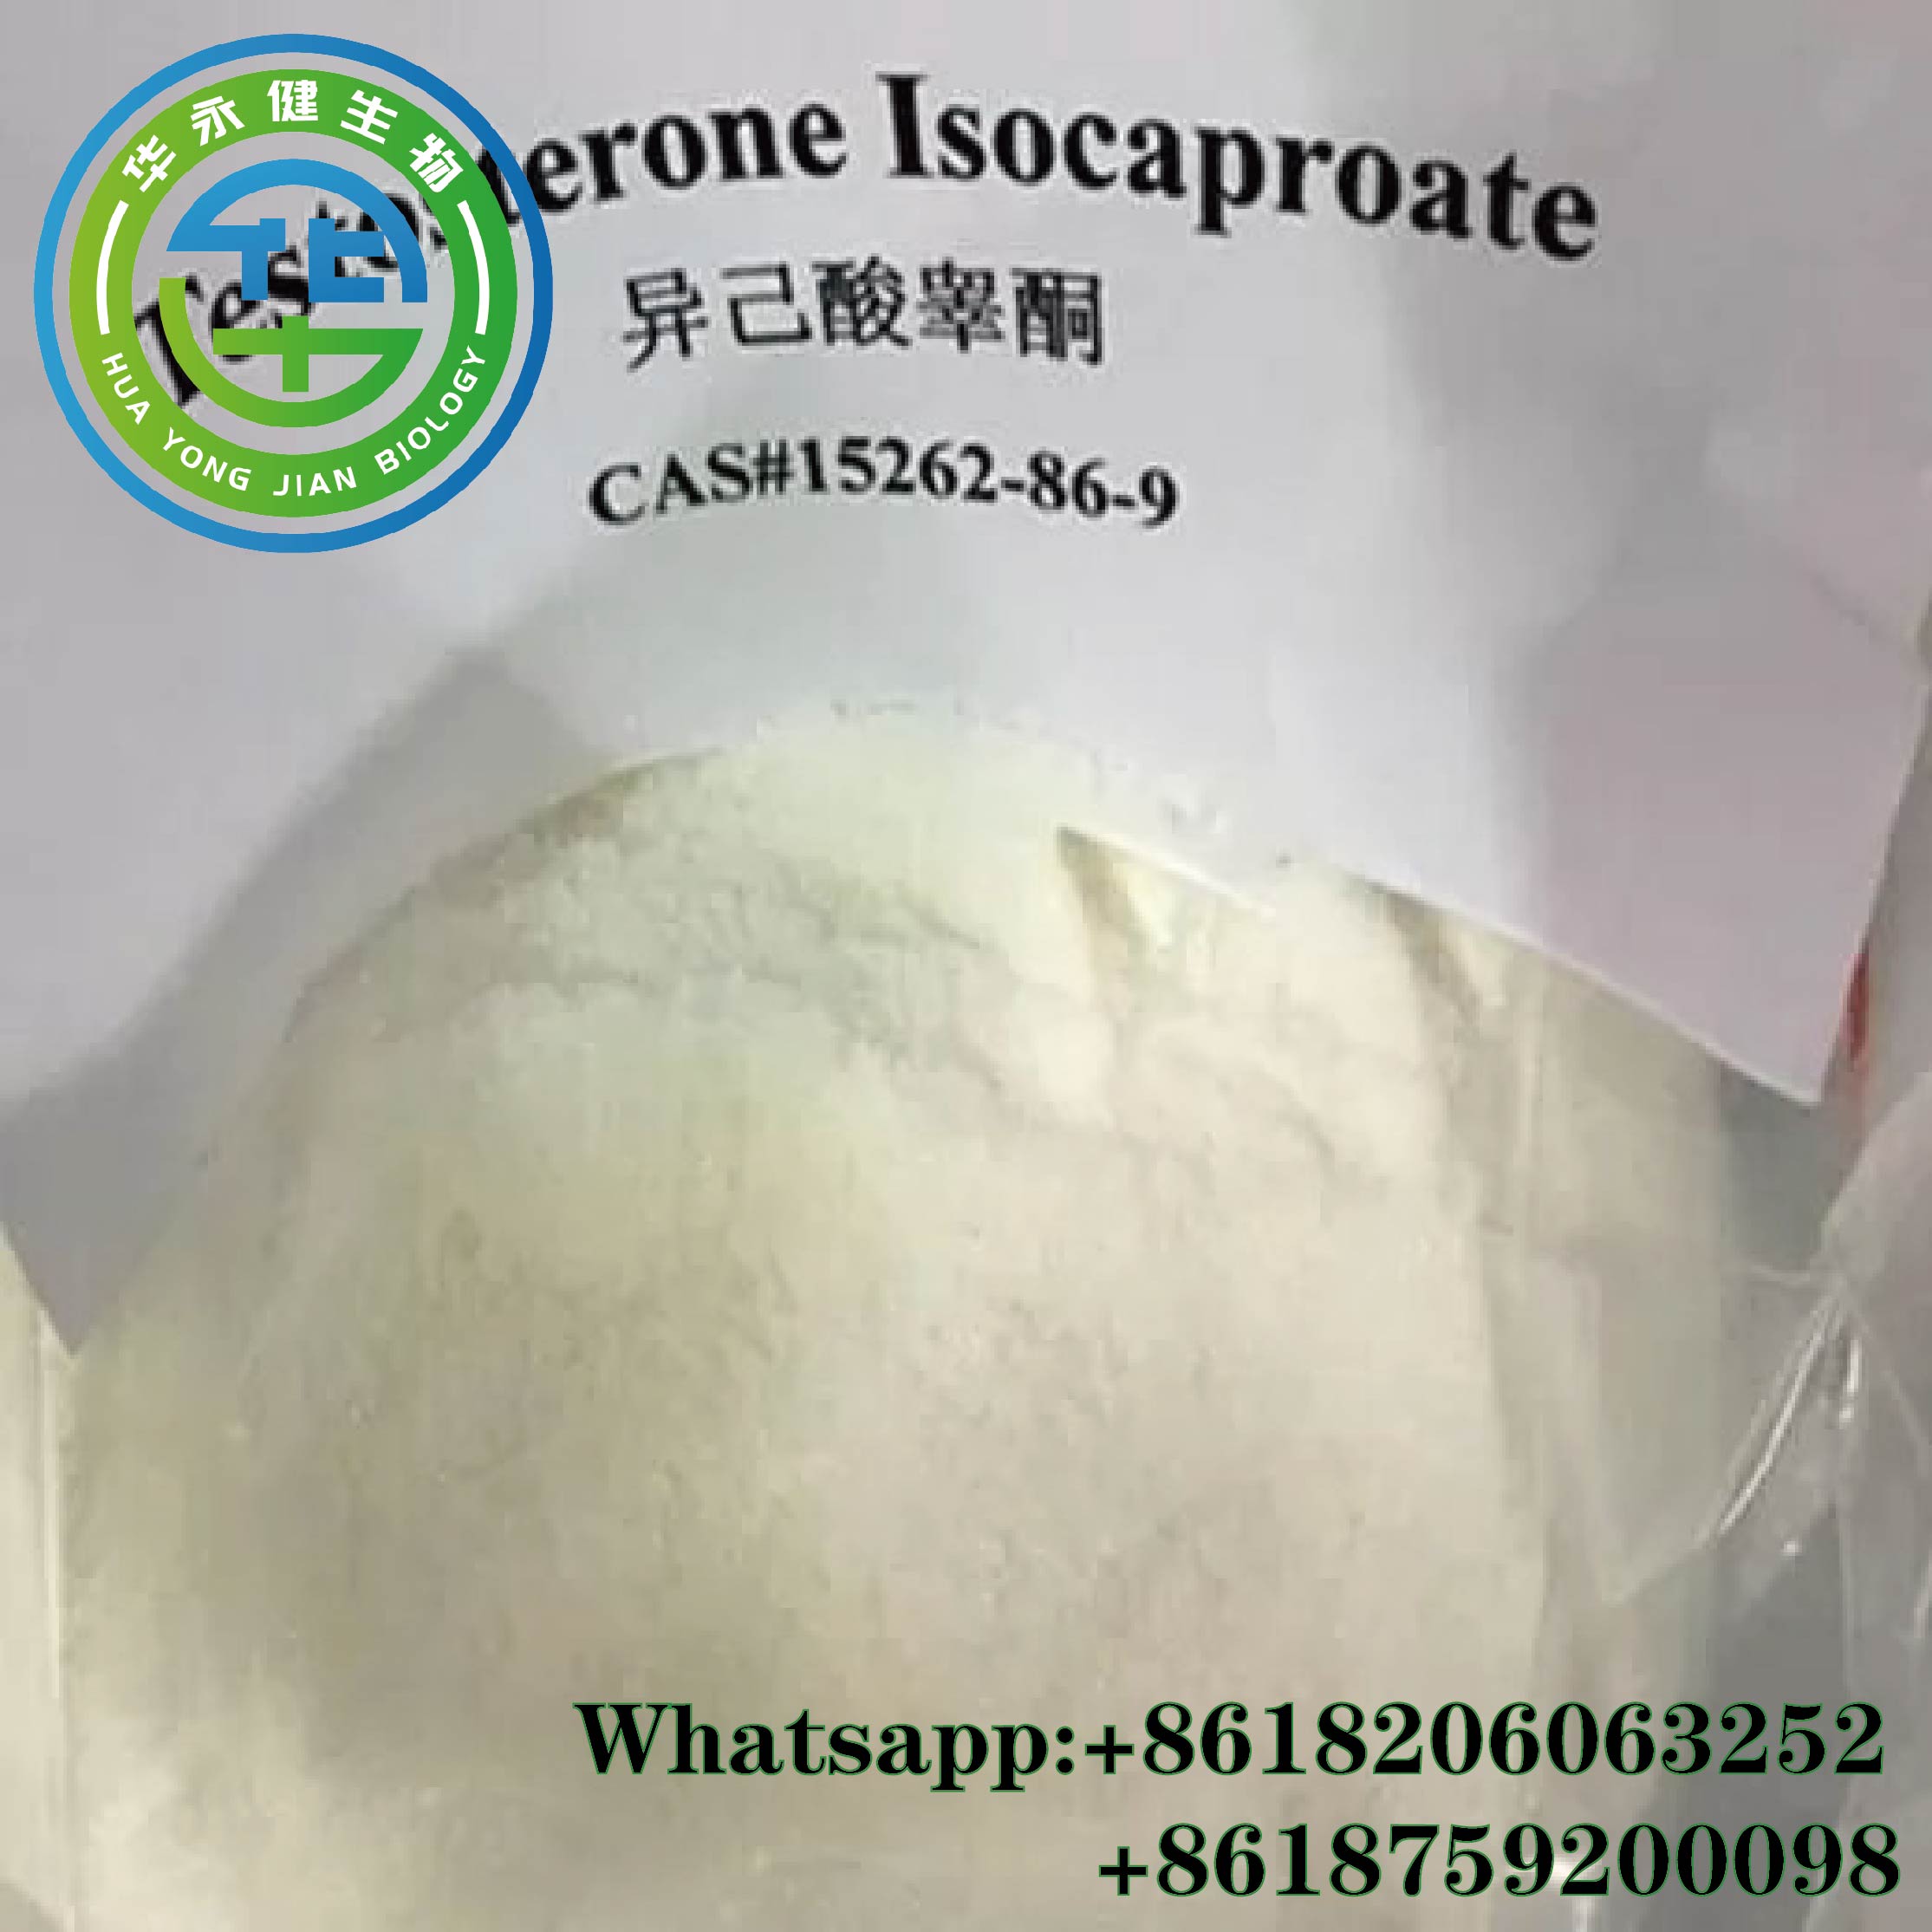 Test I Steroid Hormone Testosterone Isocaproate For Bodybuilding Test Isocaproate Hormone Powder CAS 15262-86-9 